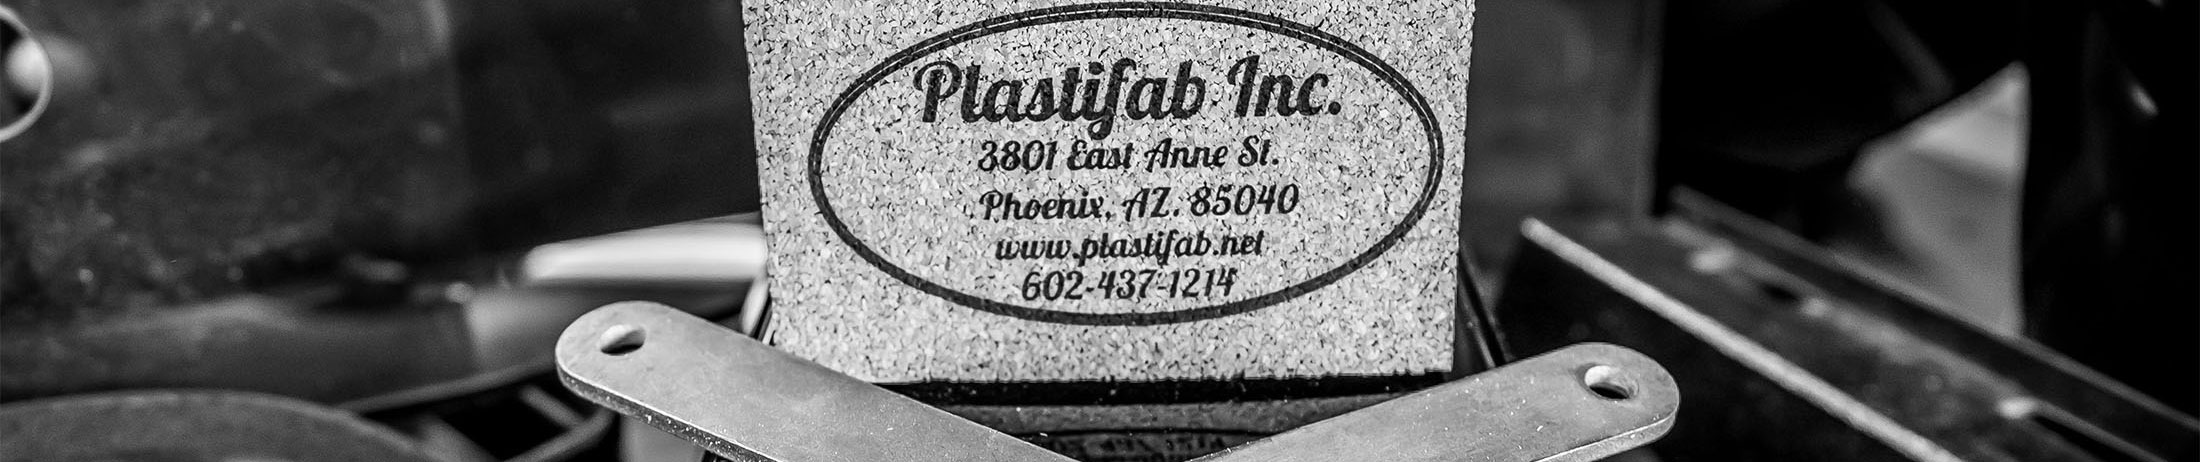 Plastifab Inc - acrylic fabrication company